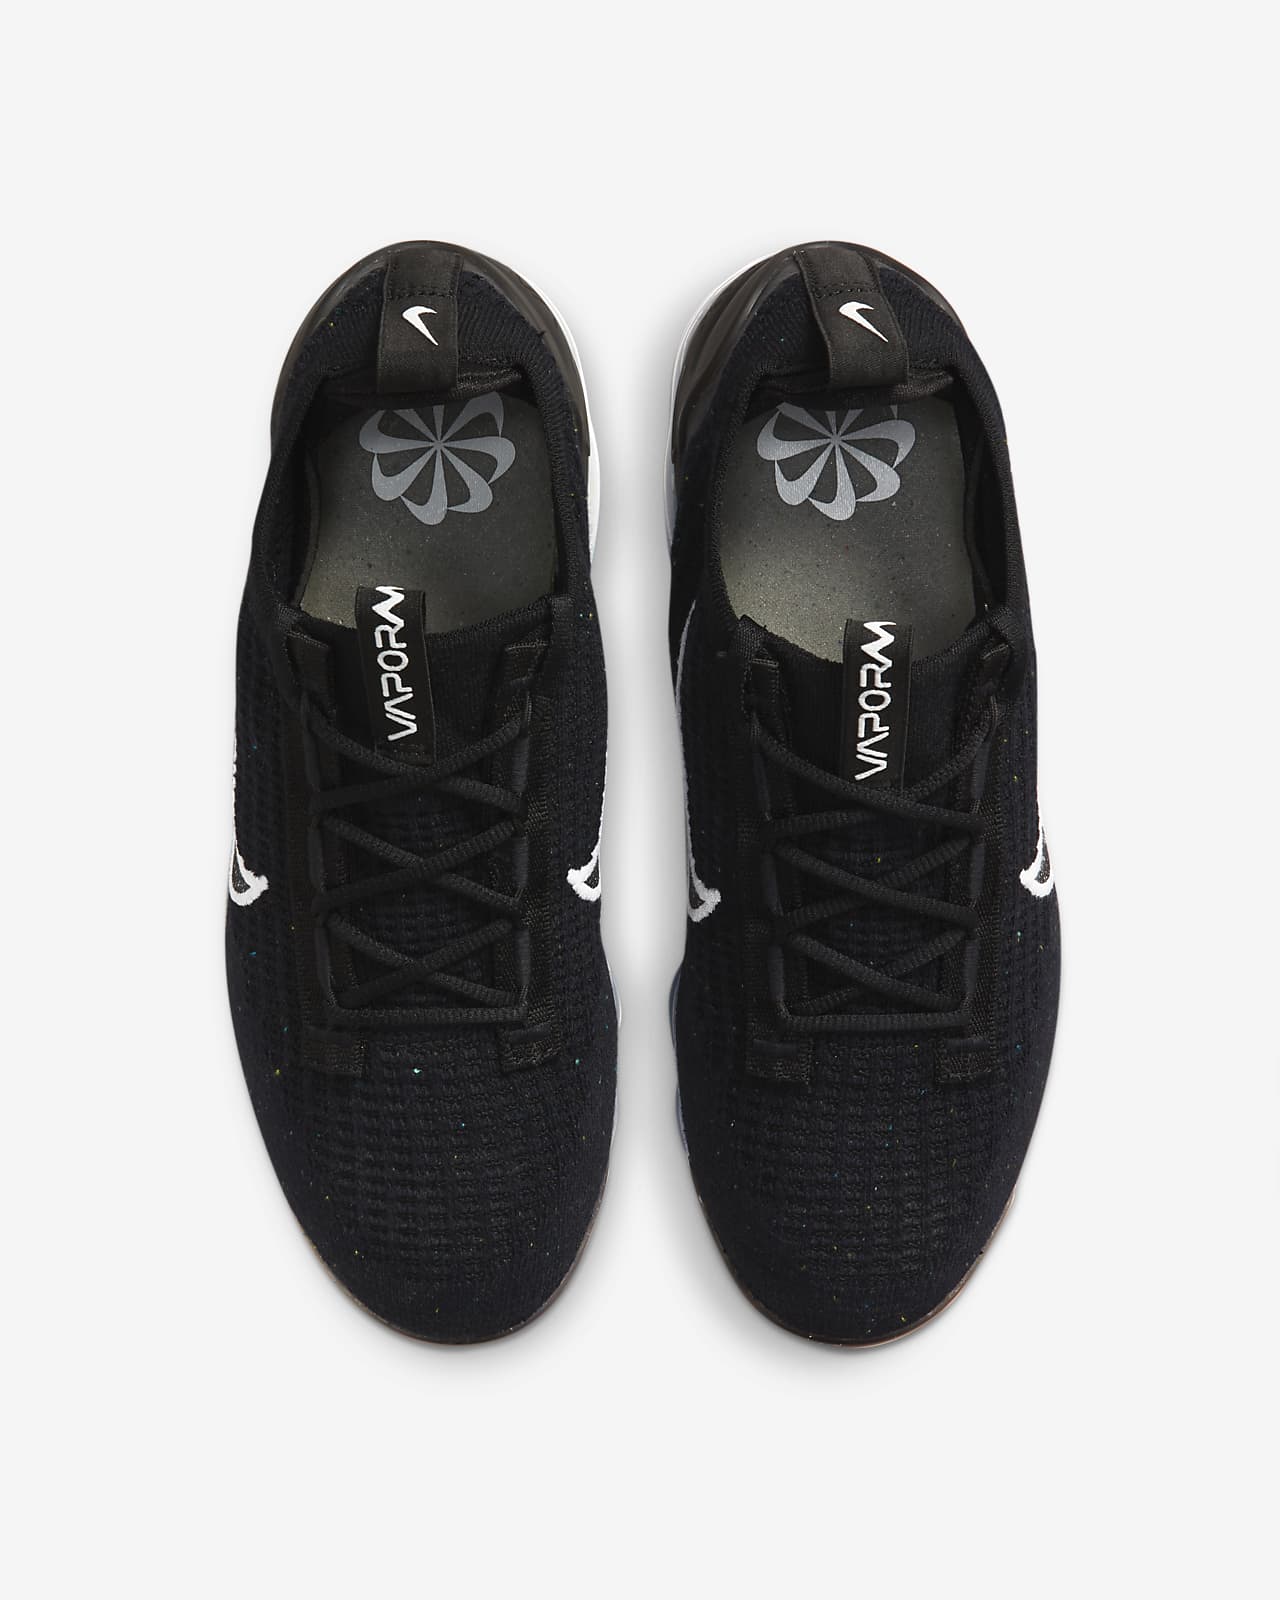 nike women's shoes vapormax black